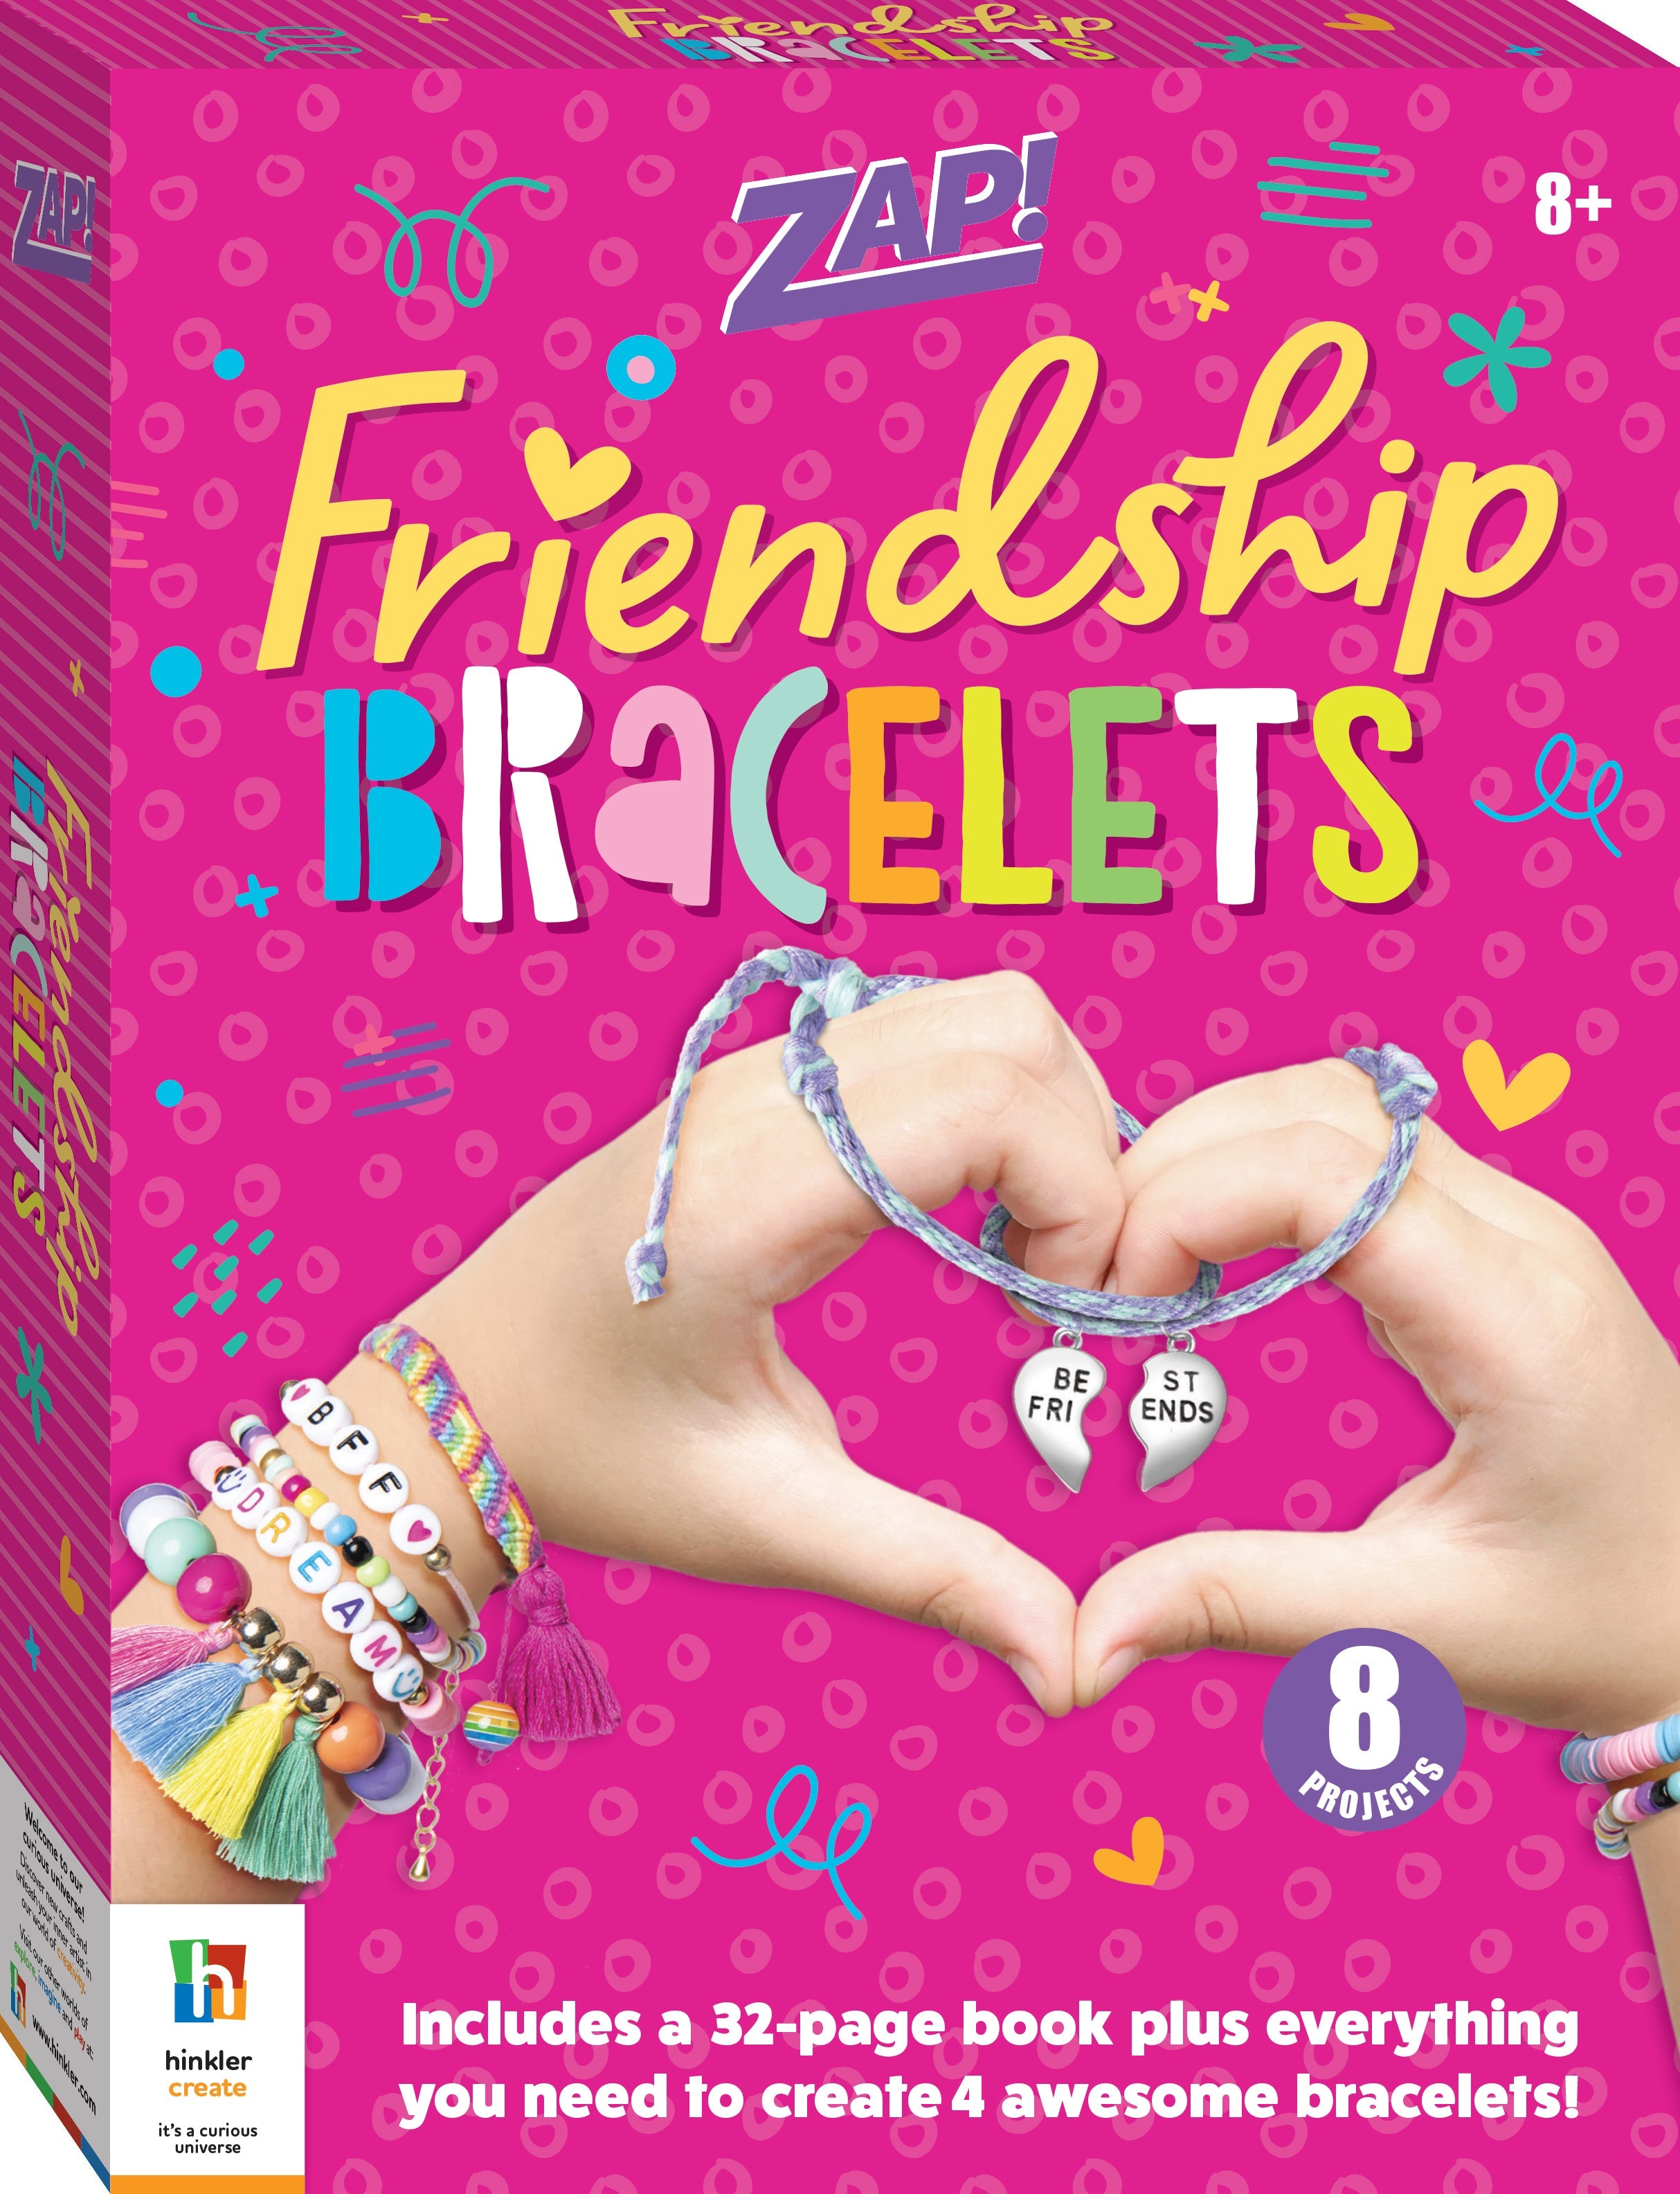 BFF Friendship Bracelets (Zap! Extra)